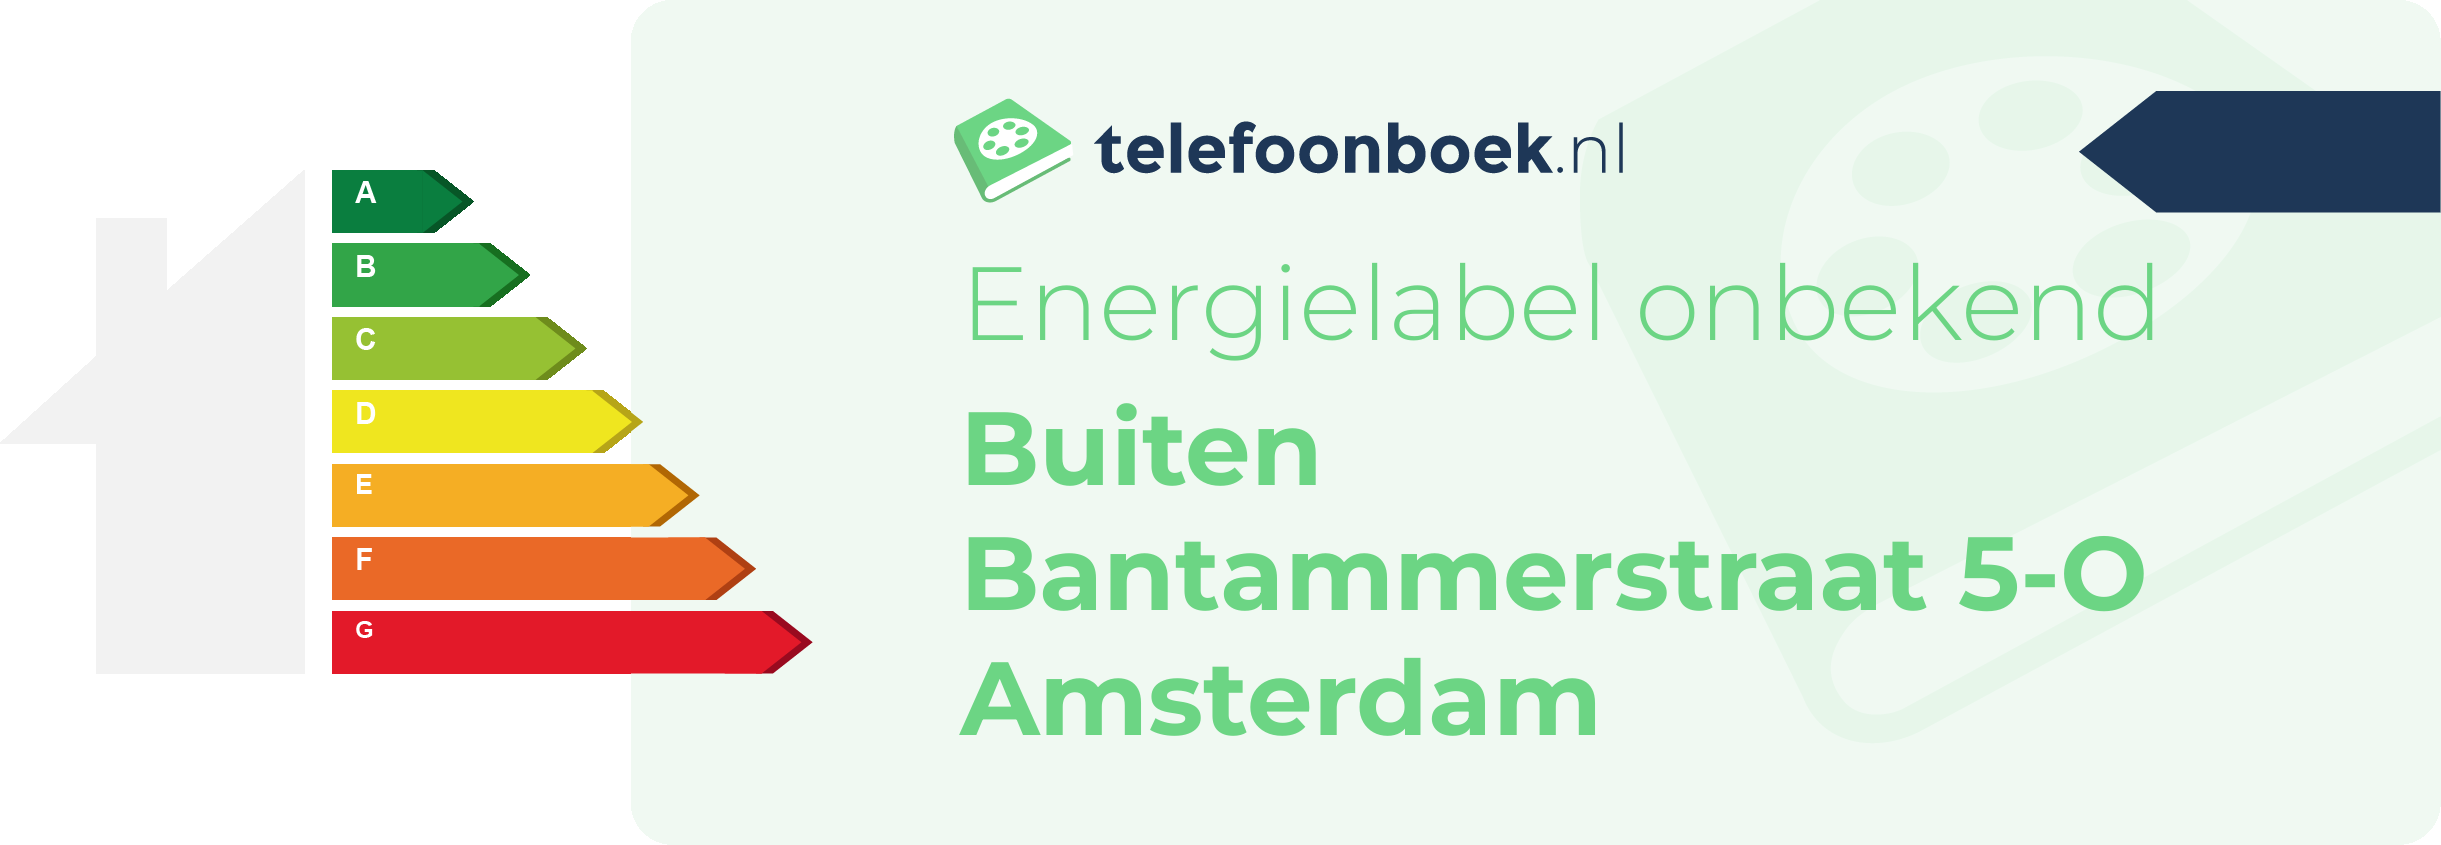 Energielabel Buiten Bantammerstraat 5-O Amsterdam